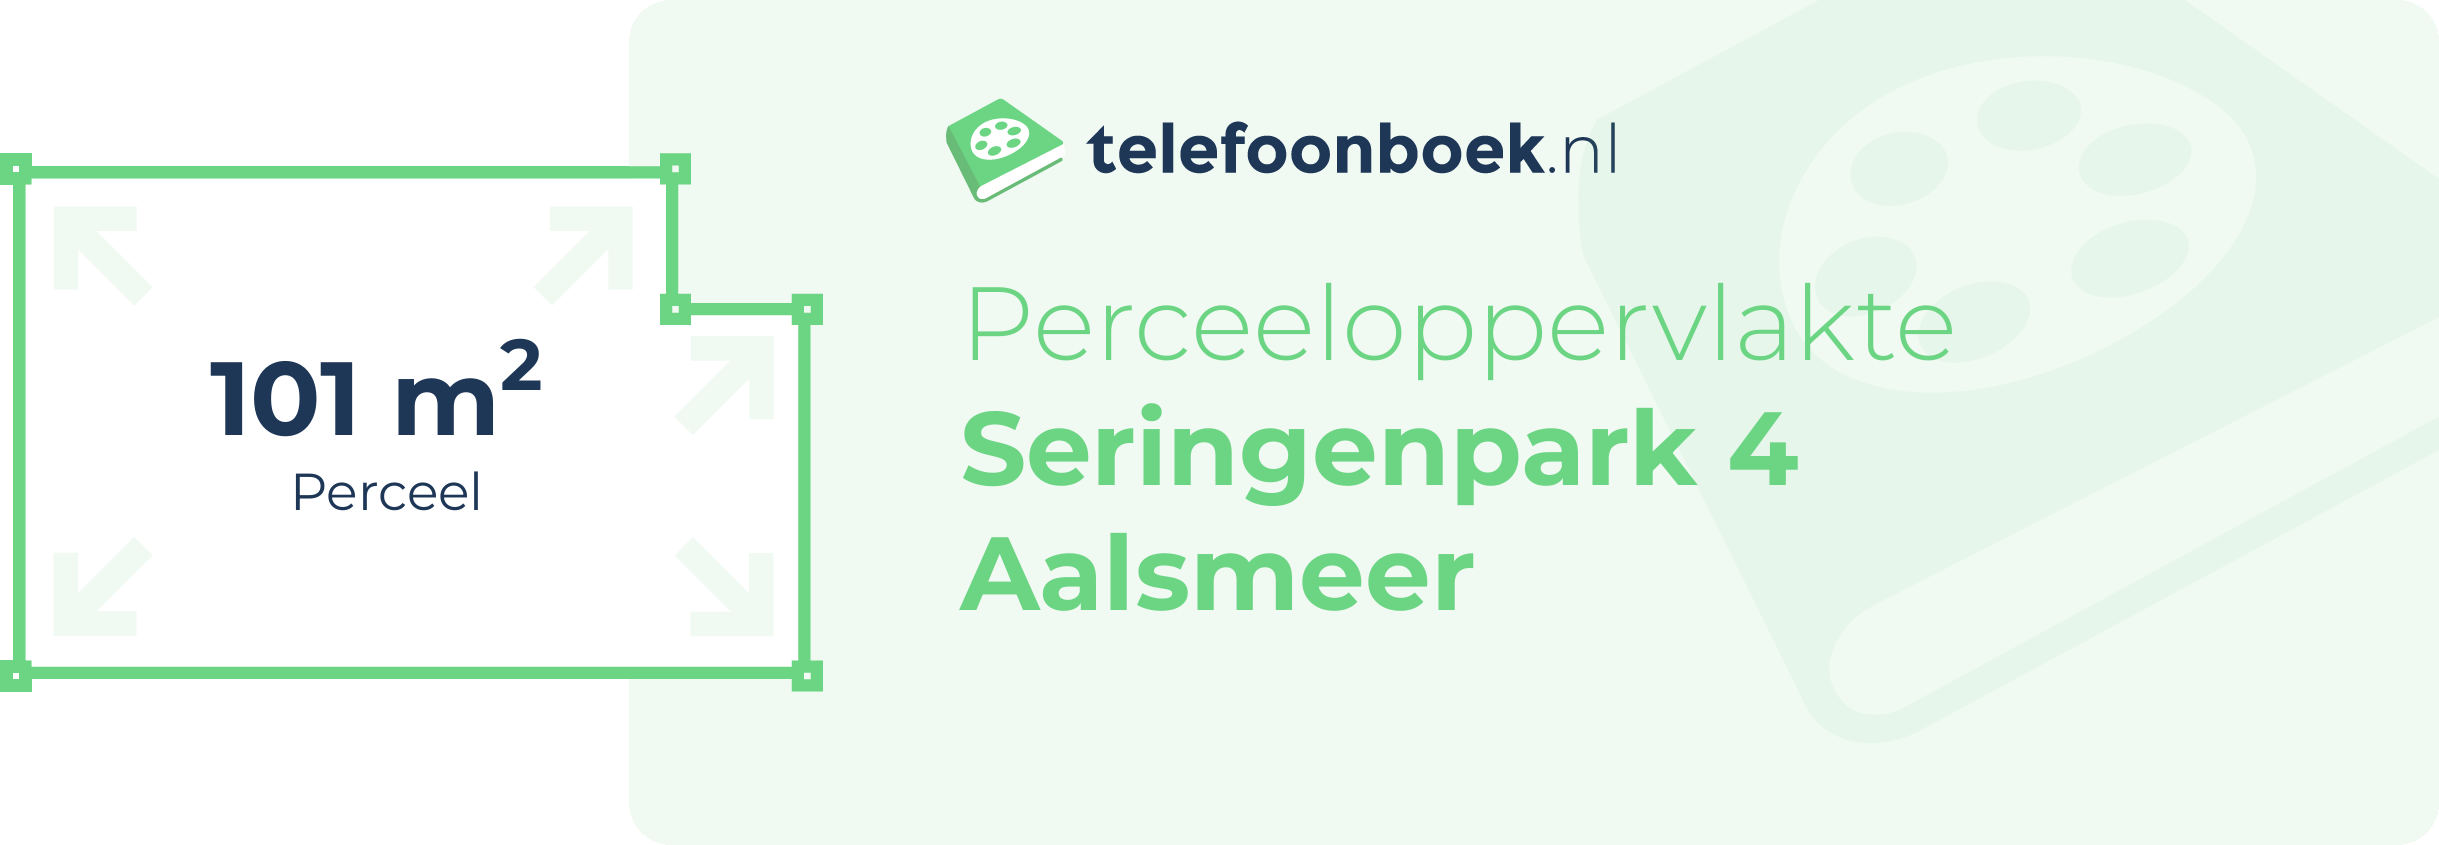 Perceeloppervlakte Seringenpark 4 Aalsmeer